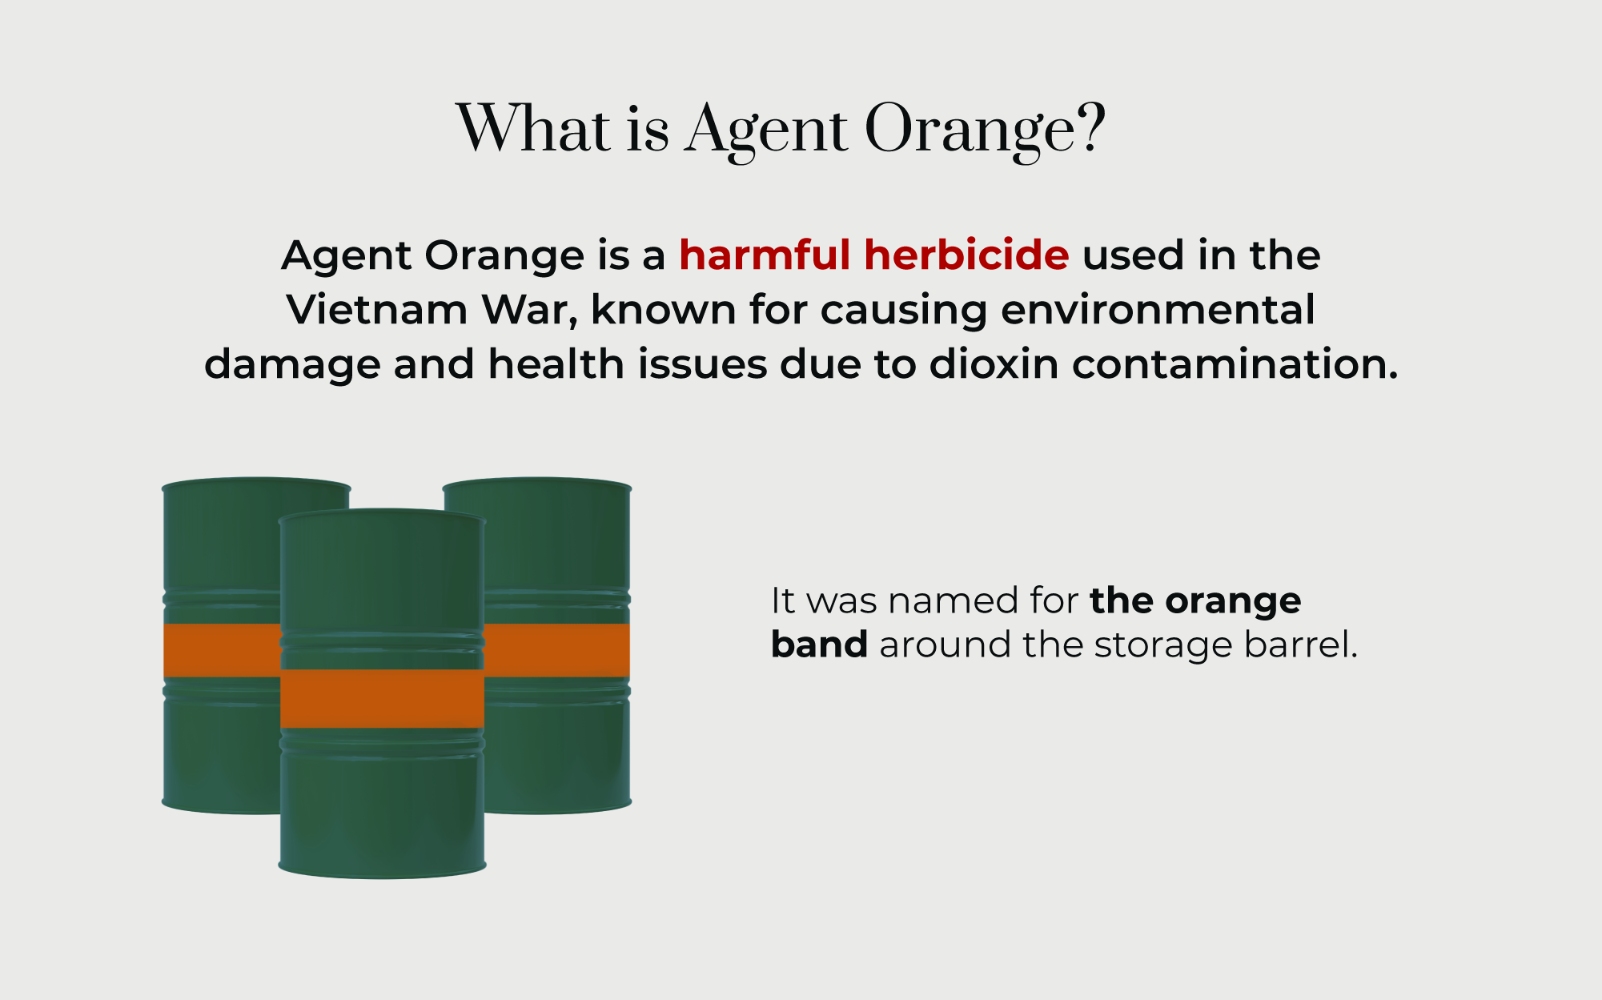 What is agent orange?